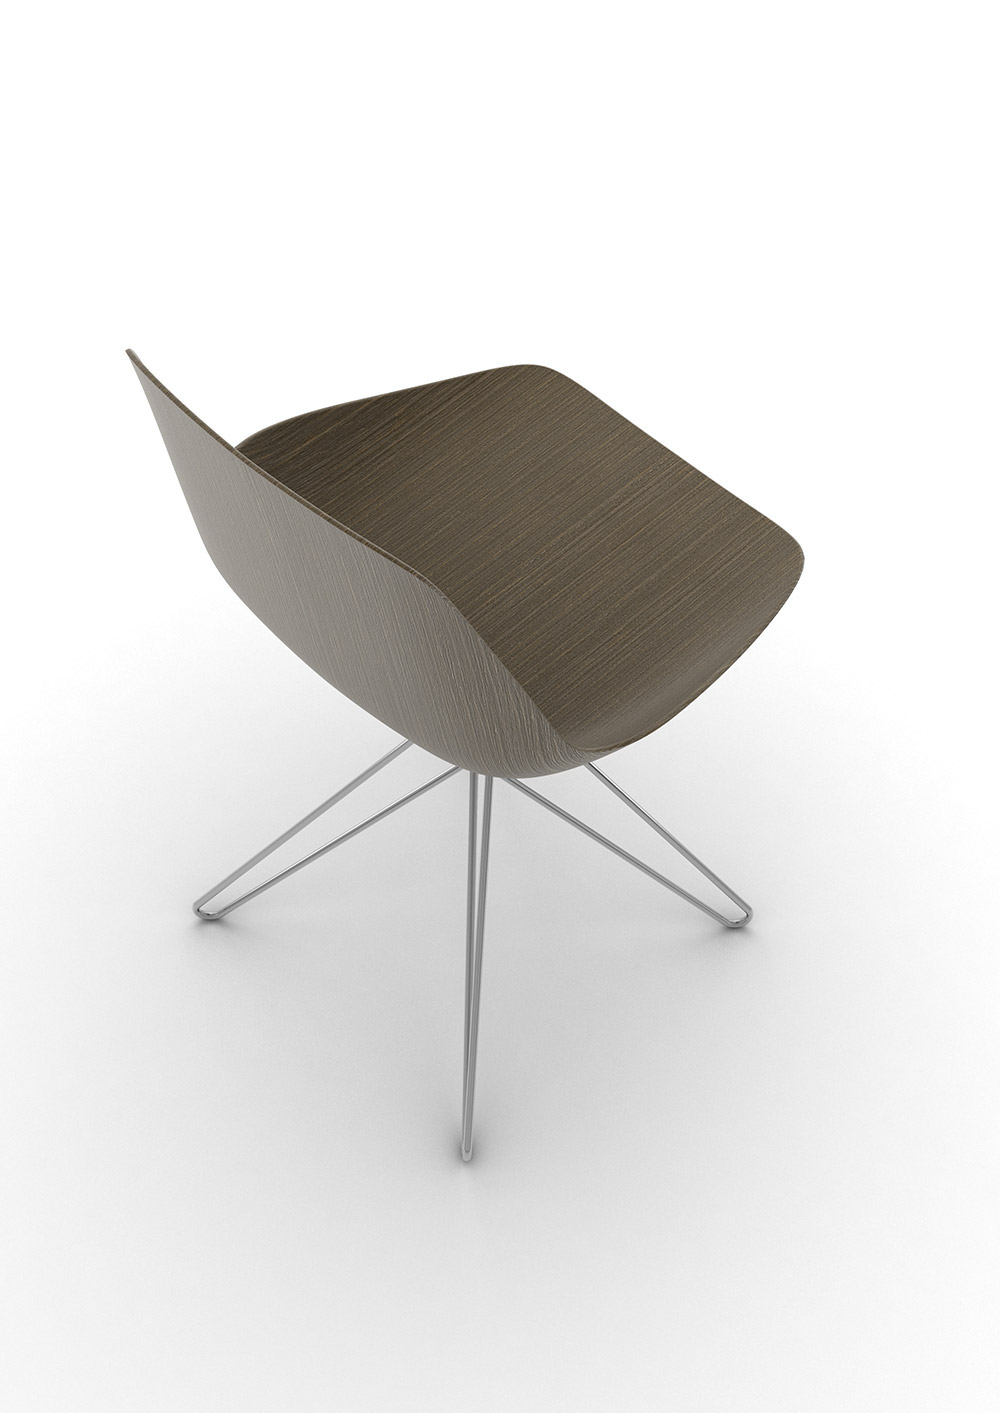 Adobe Portfolio Harmony poliform Rodrigo Torres design chair salone del mobile wooden chair